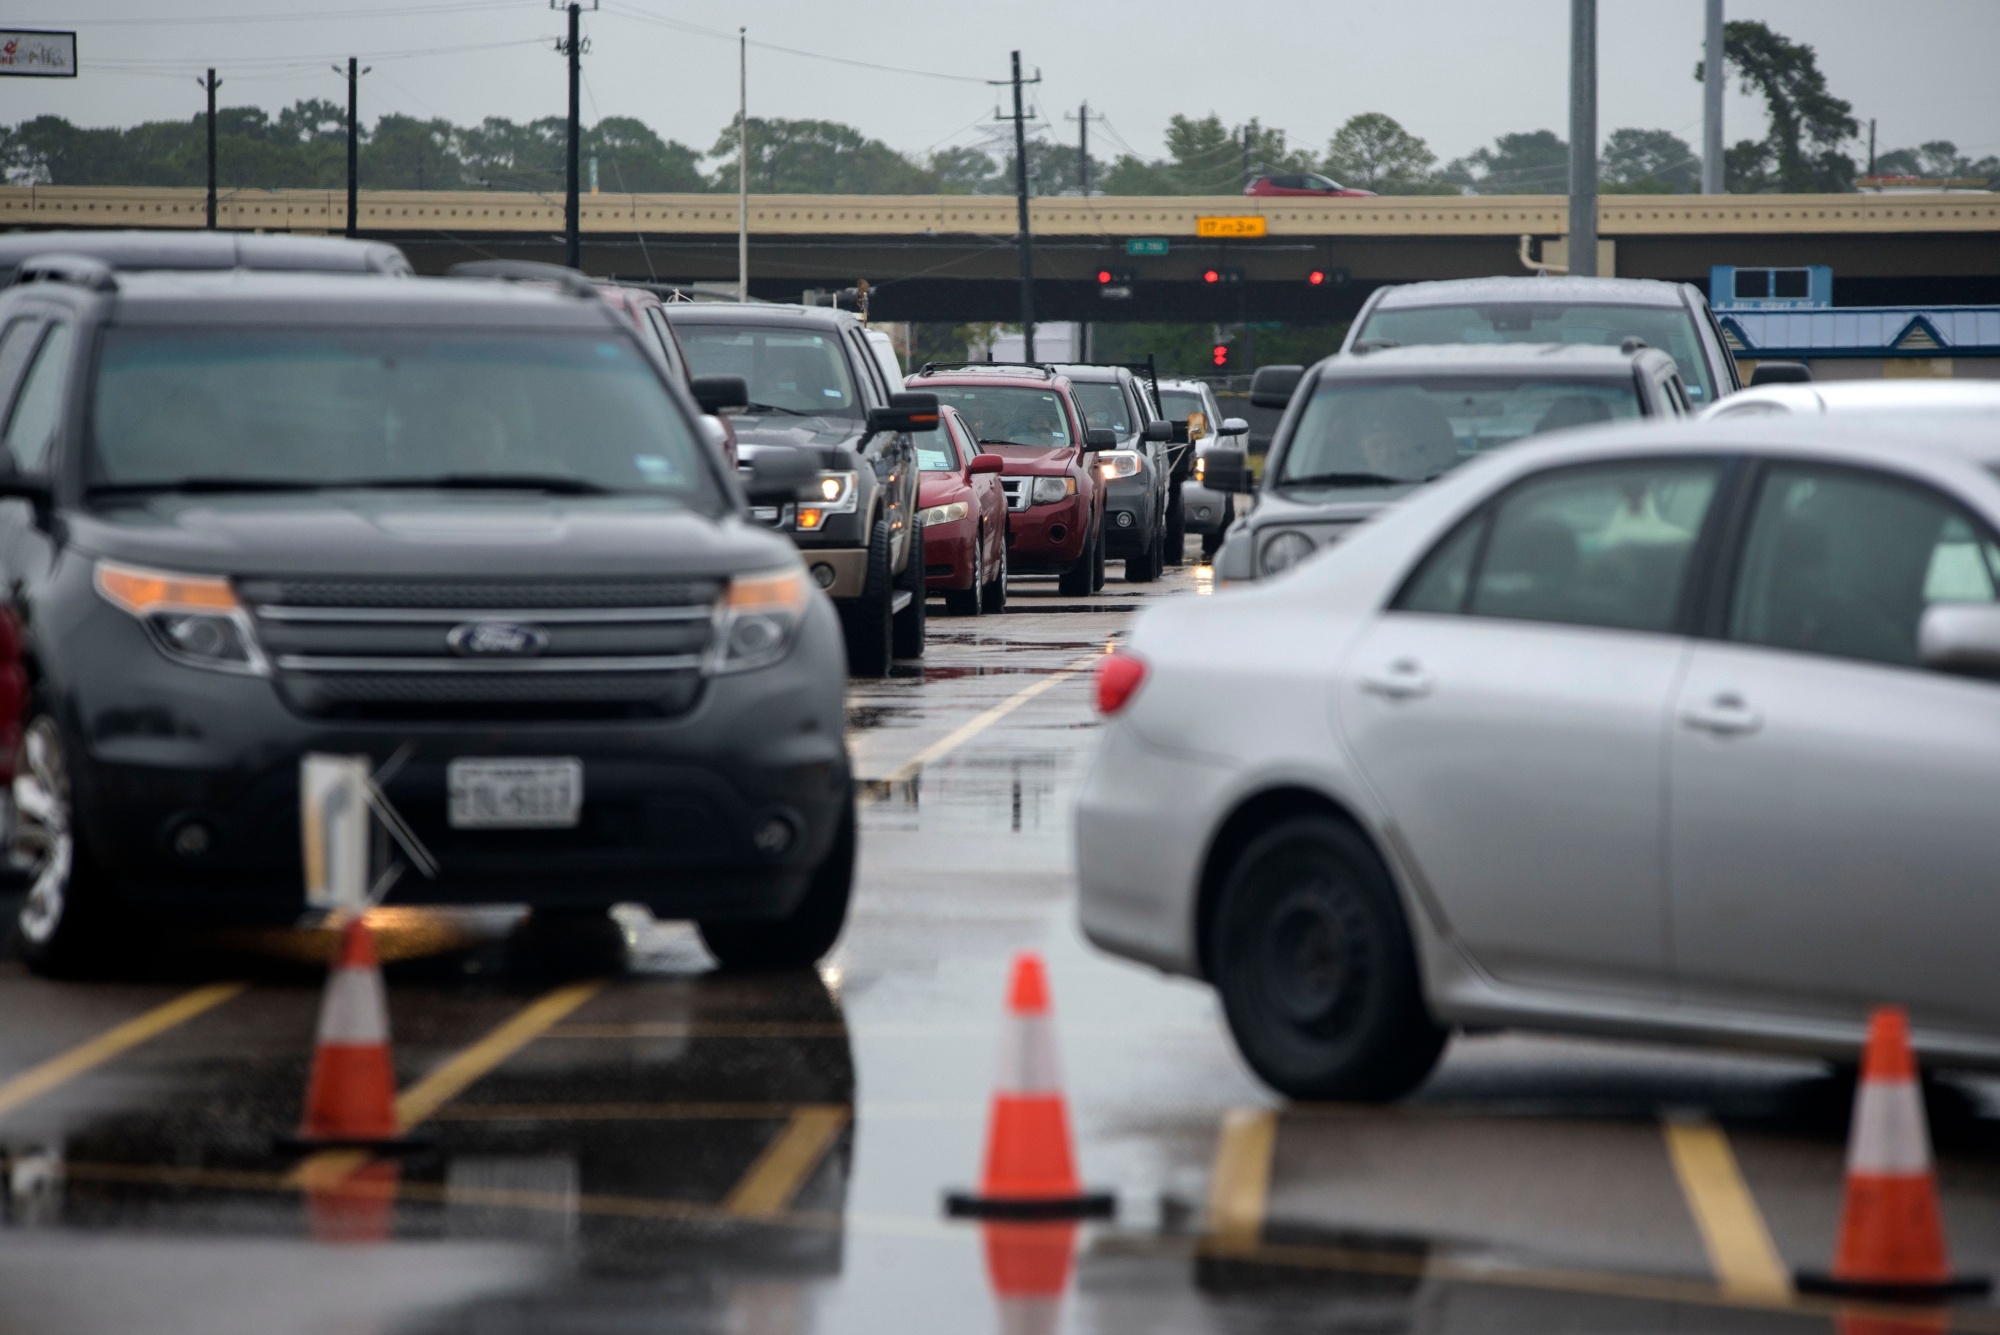 Cars line up at the Delmar Stadium&nbsp;testing site in Houston, Texas,&nbsp;on June 25, 2020.